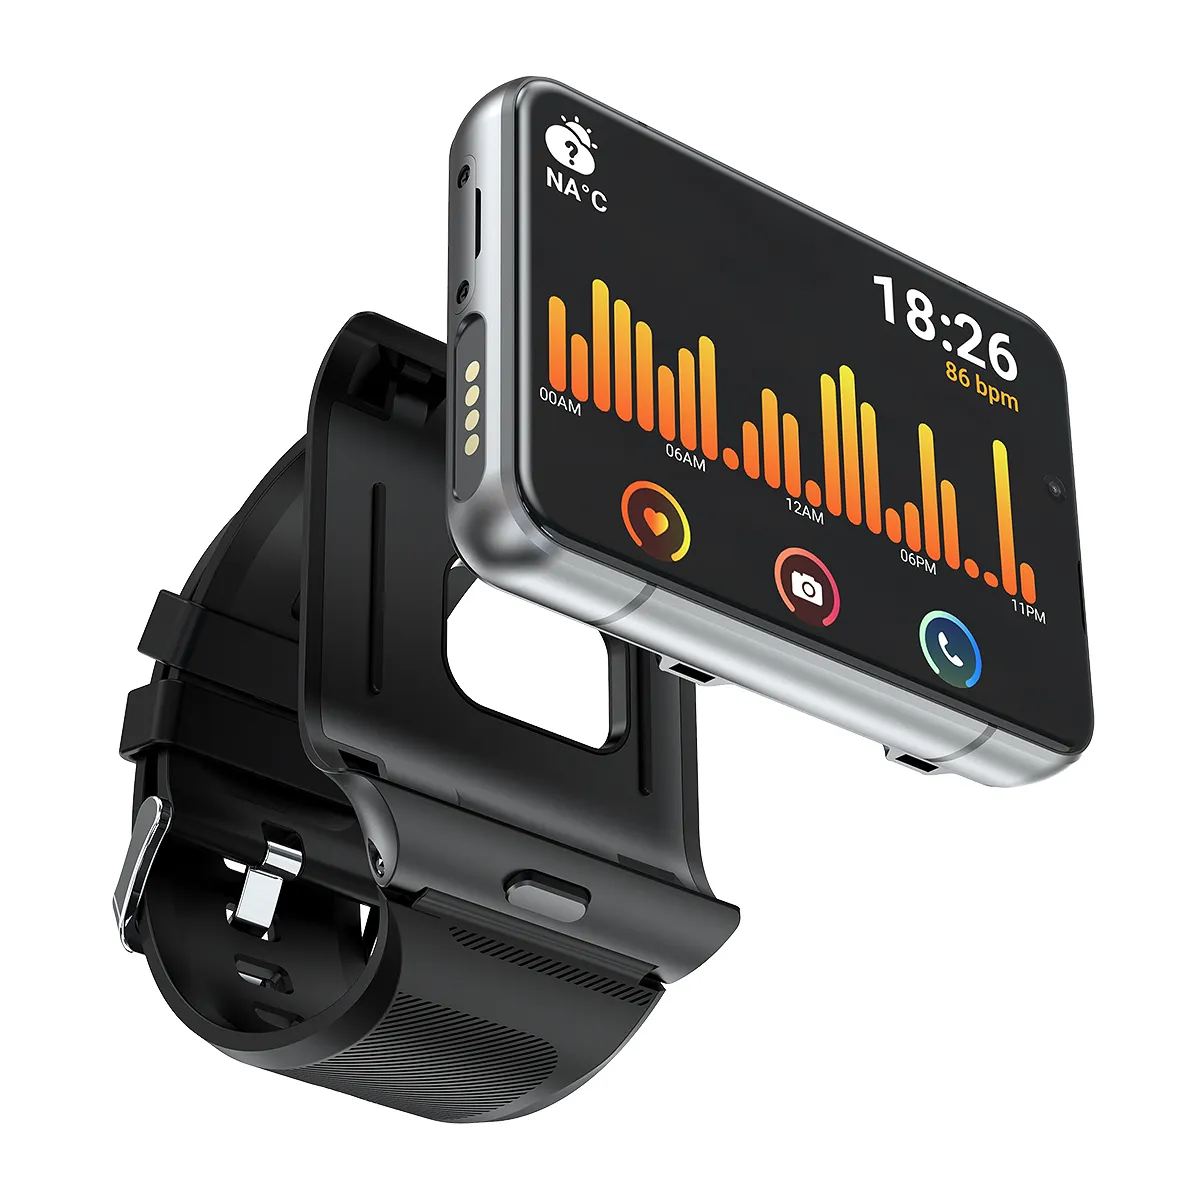 2.88 Inch Big Screen Dual HD Cameras GPS APP Installation Separable 4G SIM Card WIFI Video Calling Smart Watch